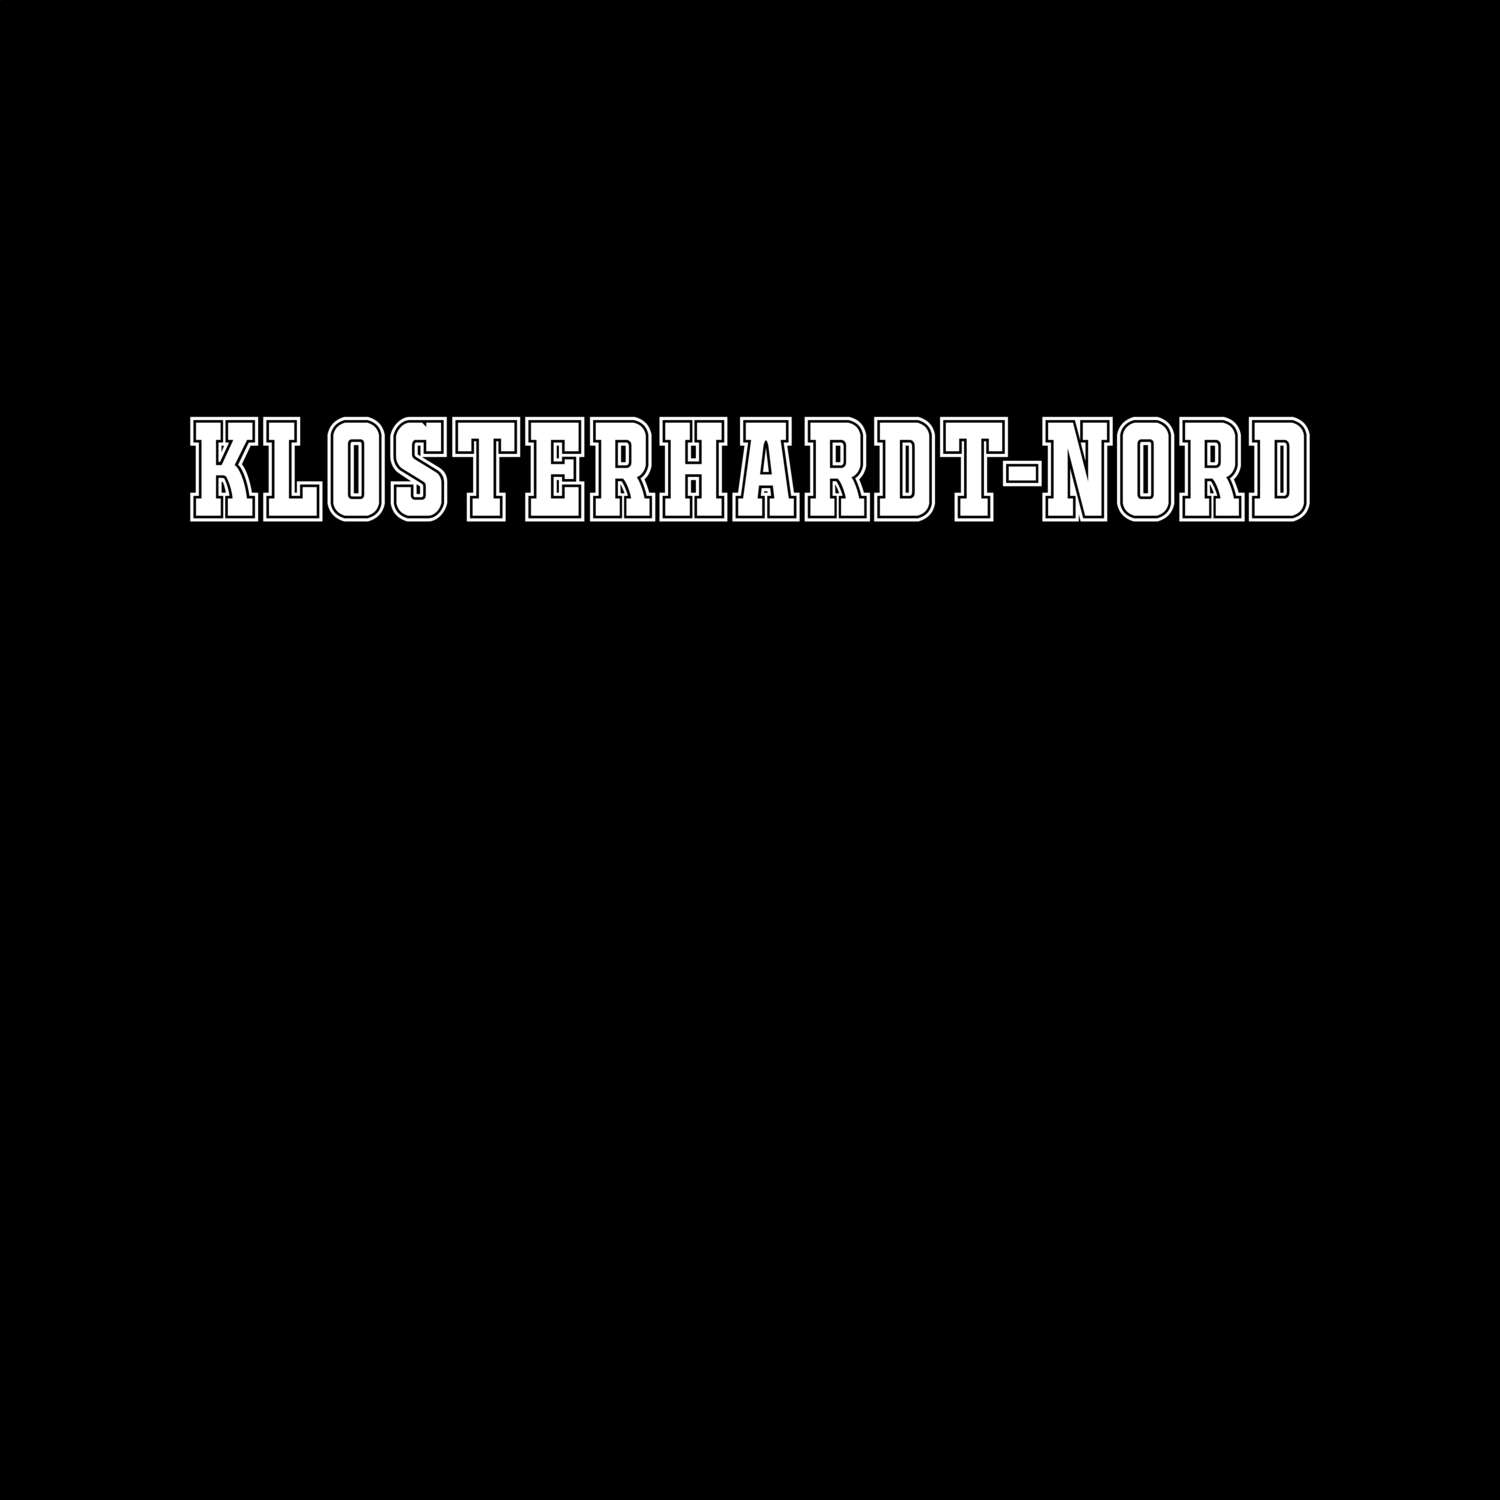 Klosterhardt-Nord T-Shirt »Classic«